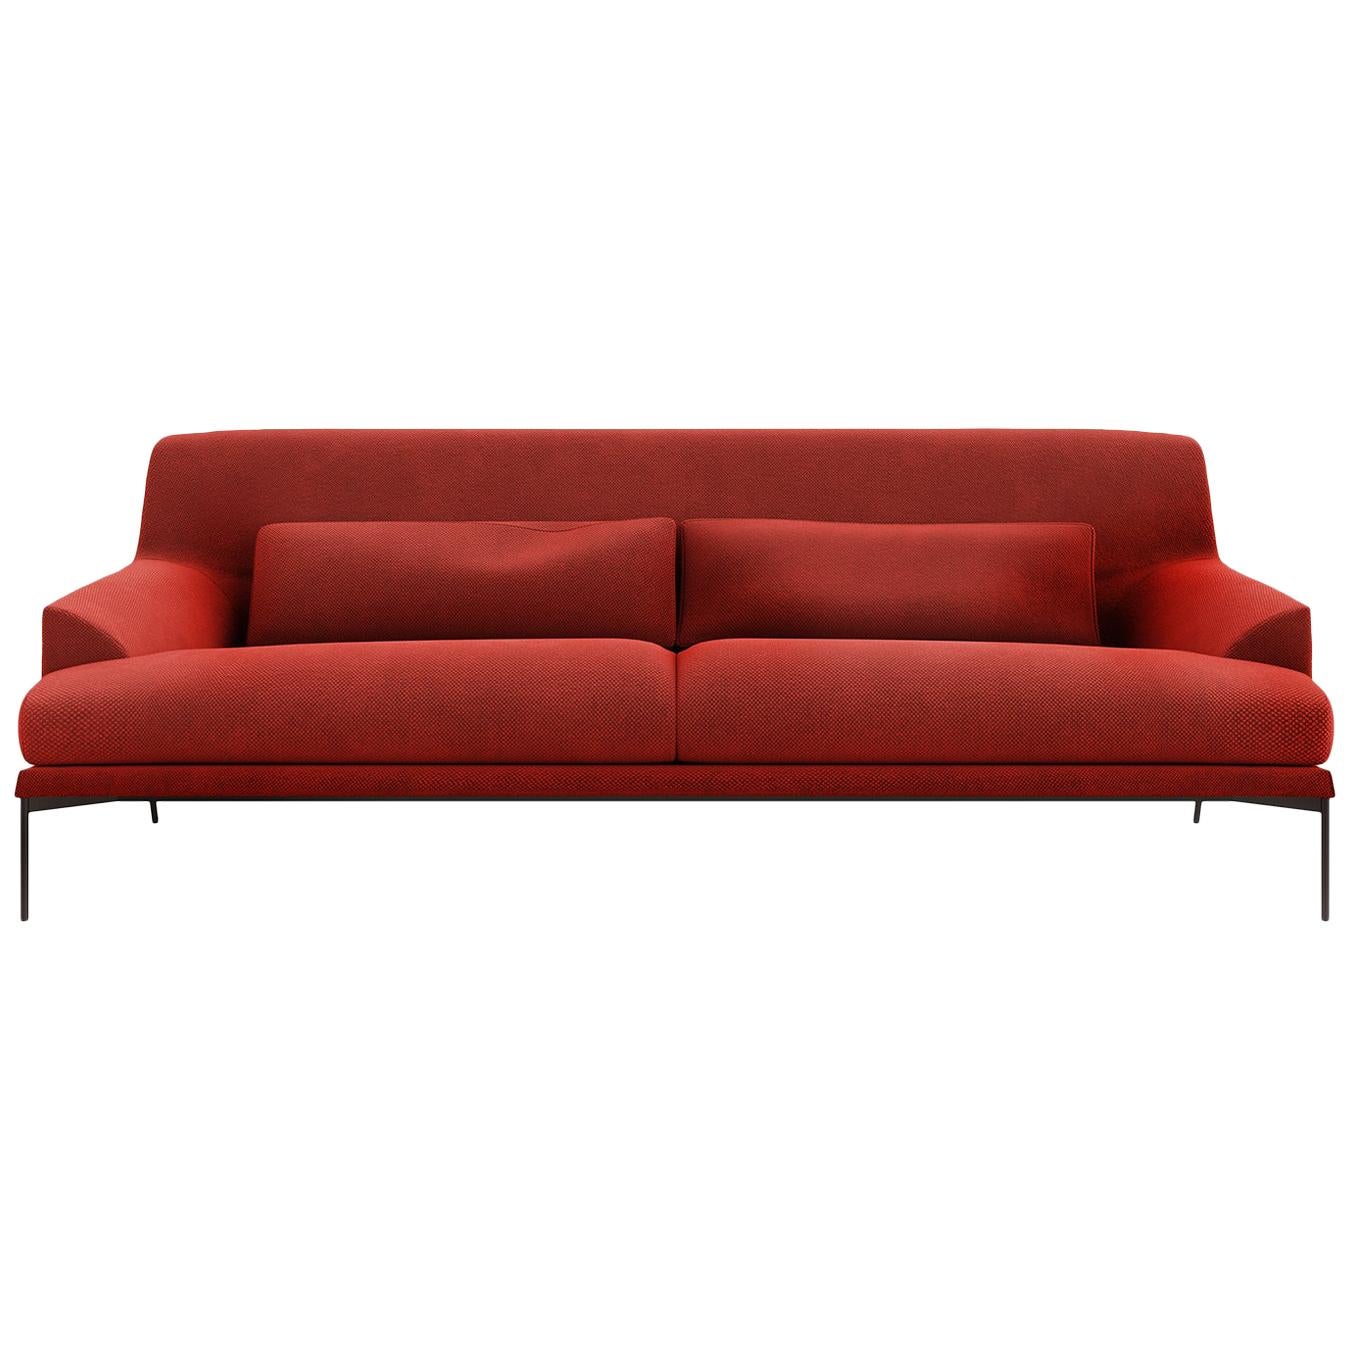 Tacchini Montevideo Four-Seater Sofa with Down Cushion by Claesson Koivisto Rune